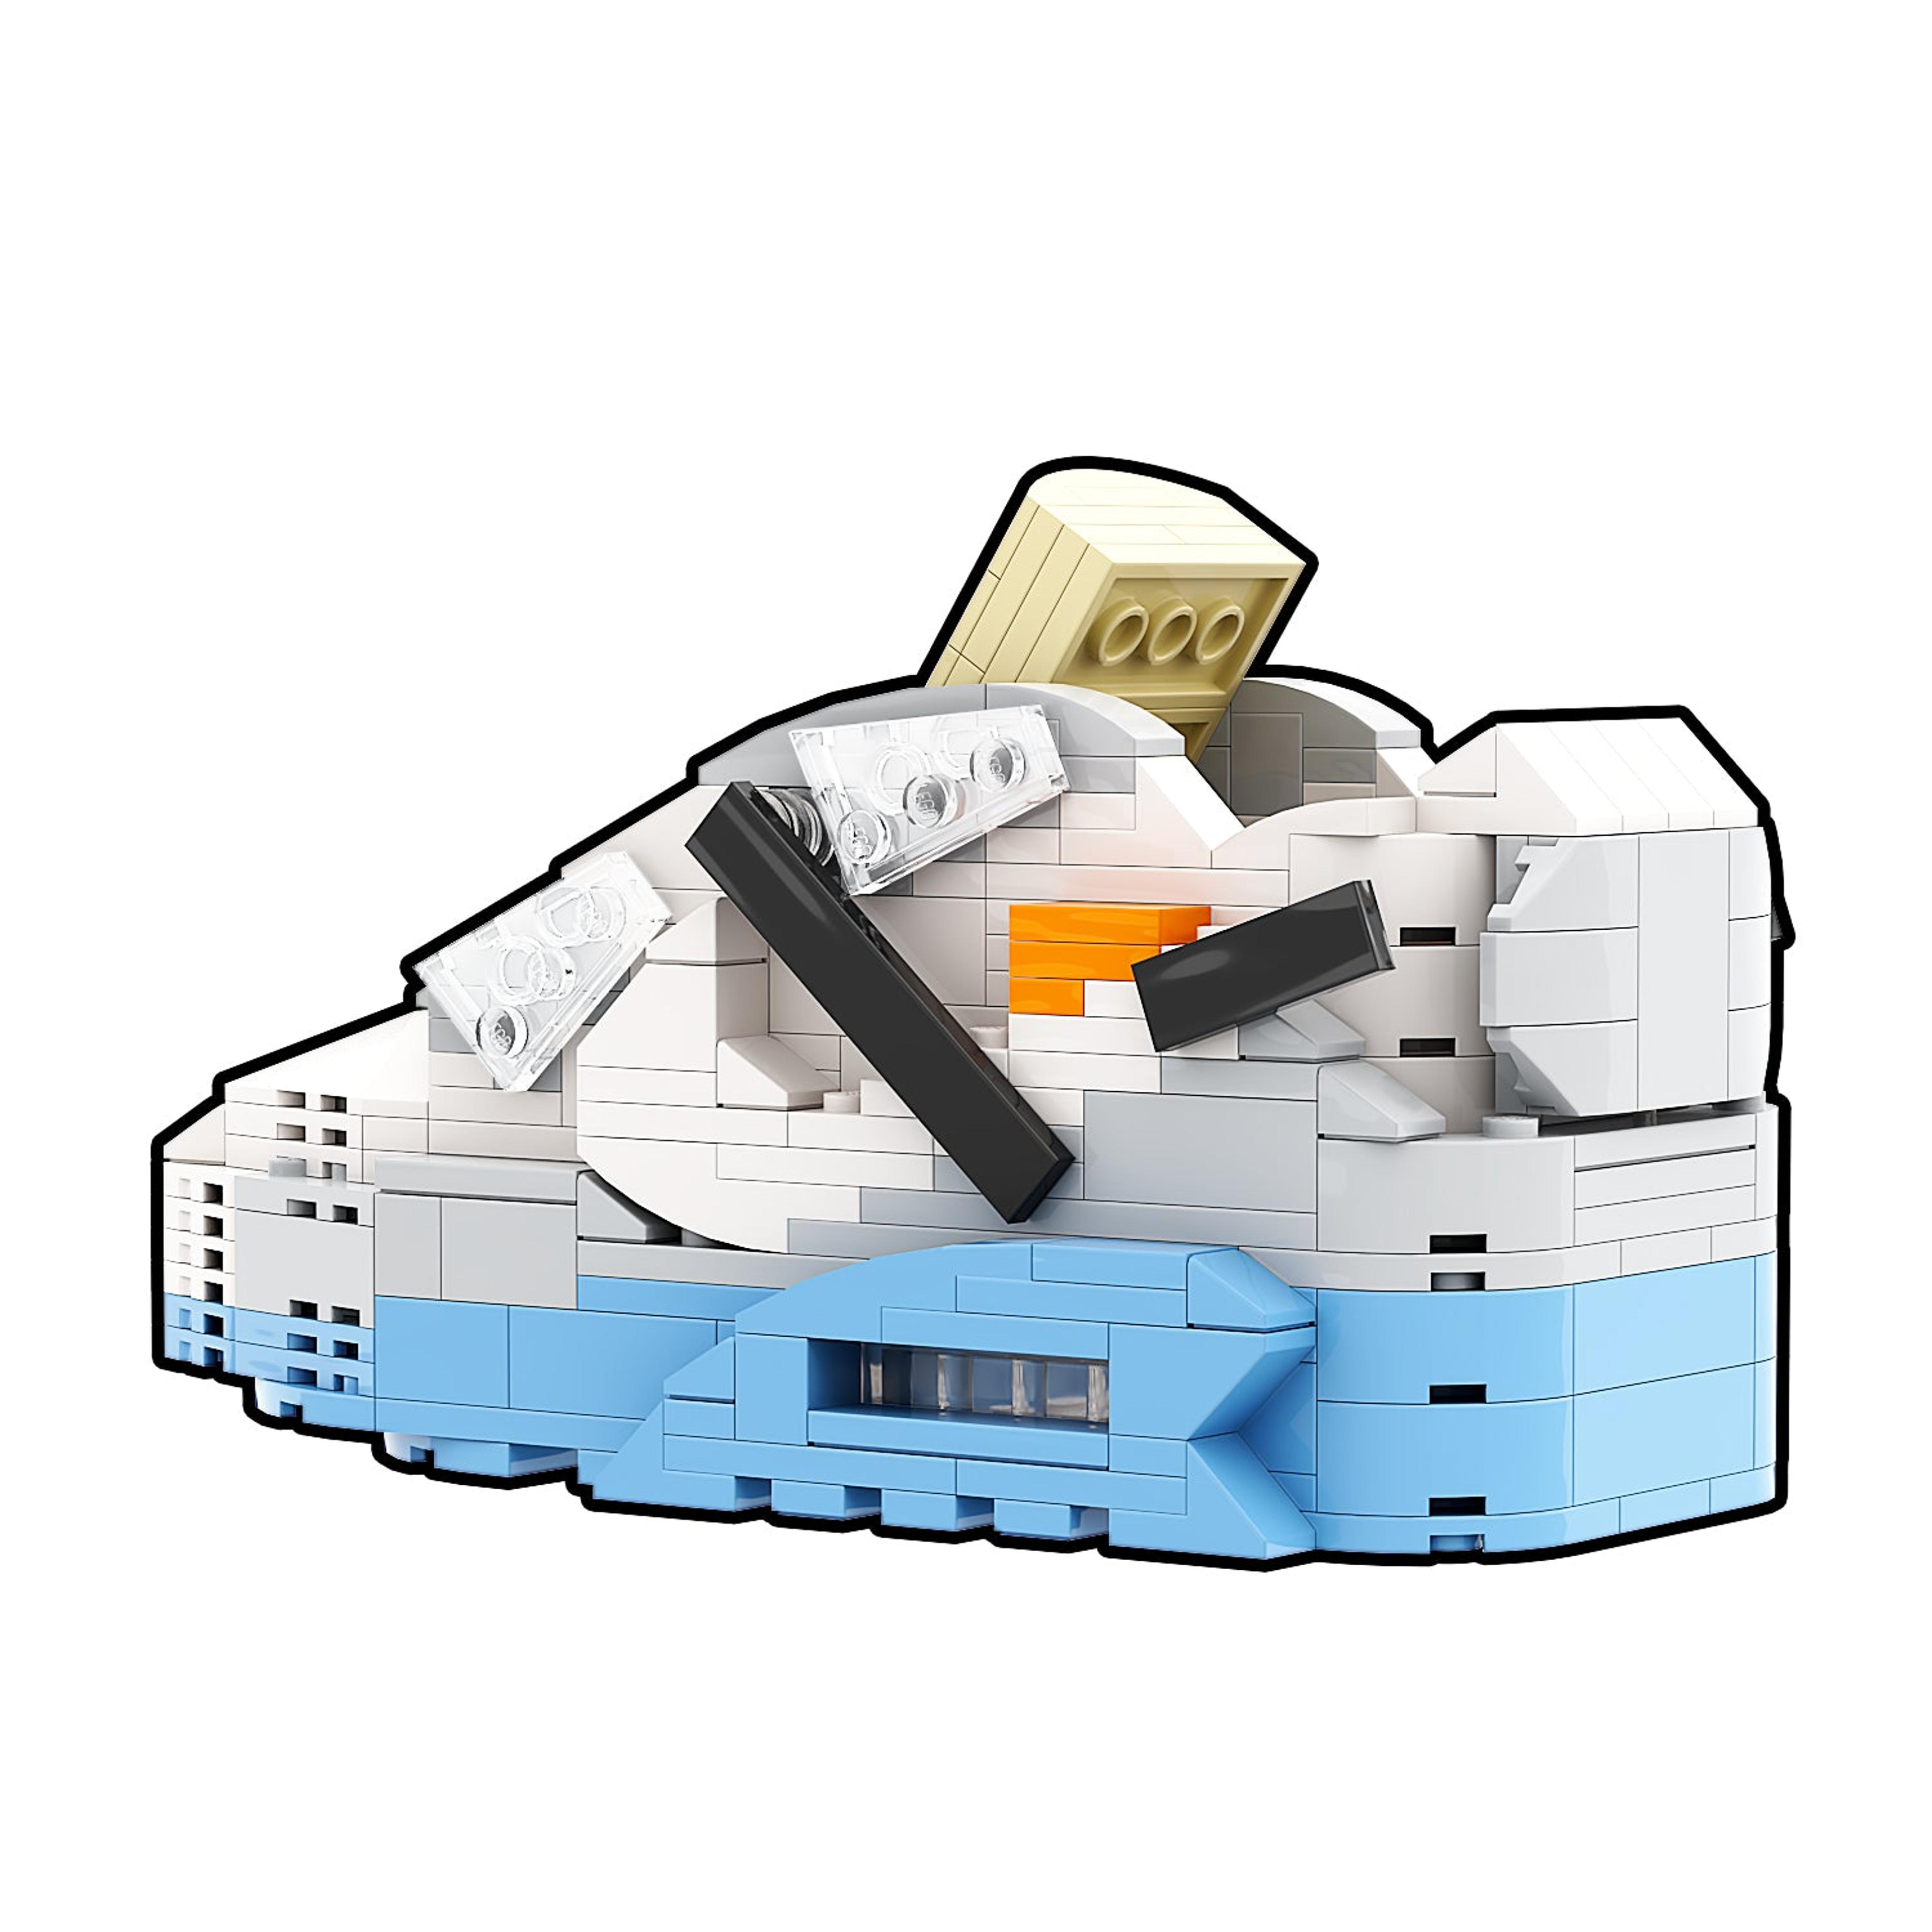 Alternate View 3 of REGULAR Air Max 90 "Off-White White" Sneaker Bricks with Mini Fi